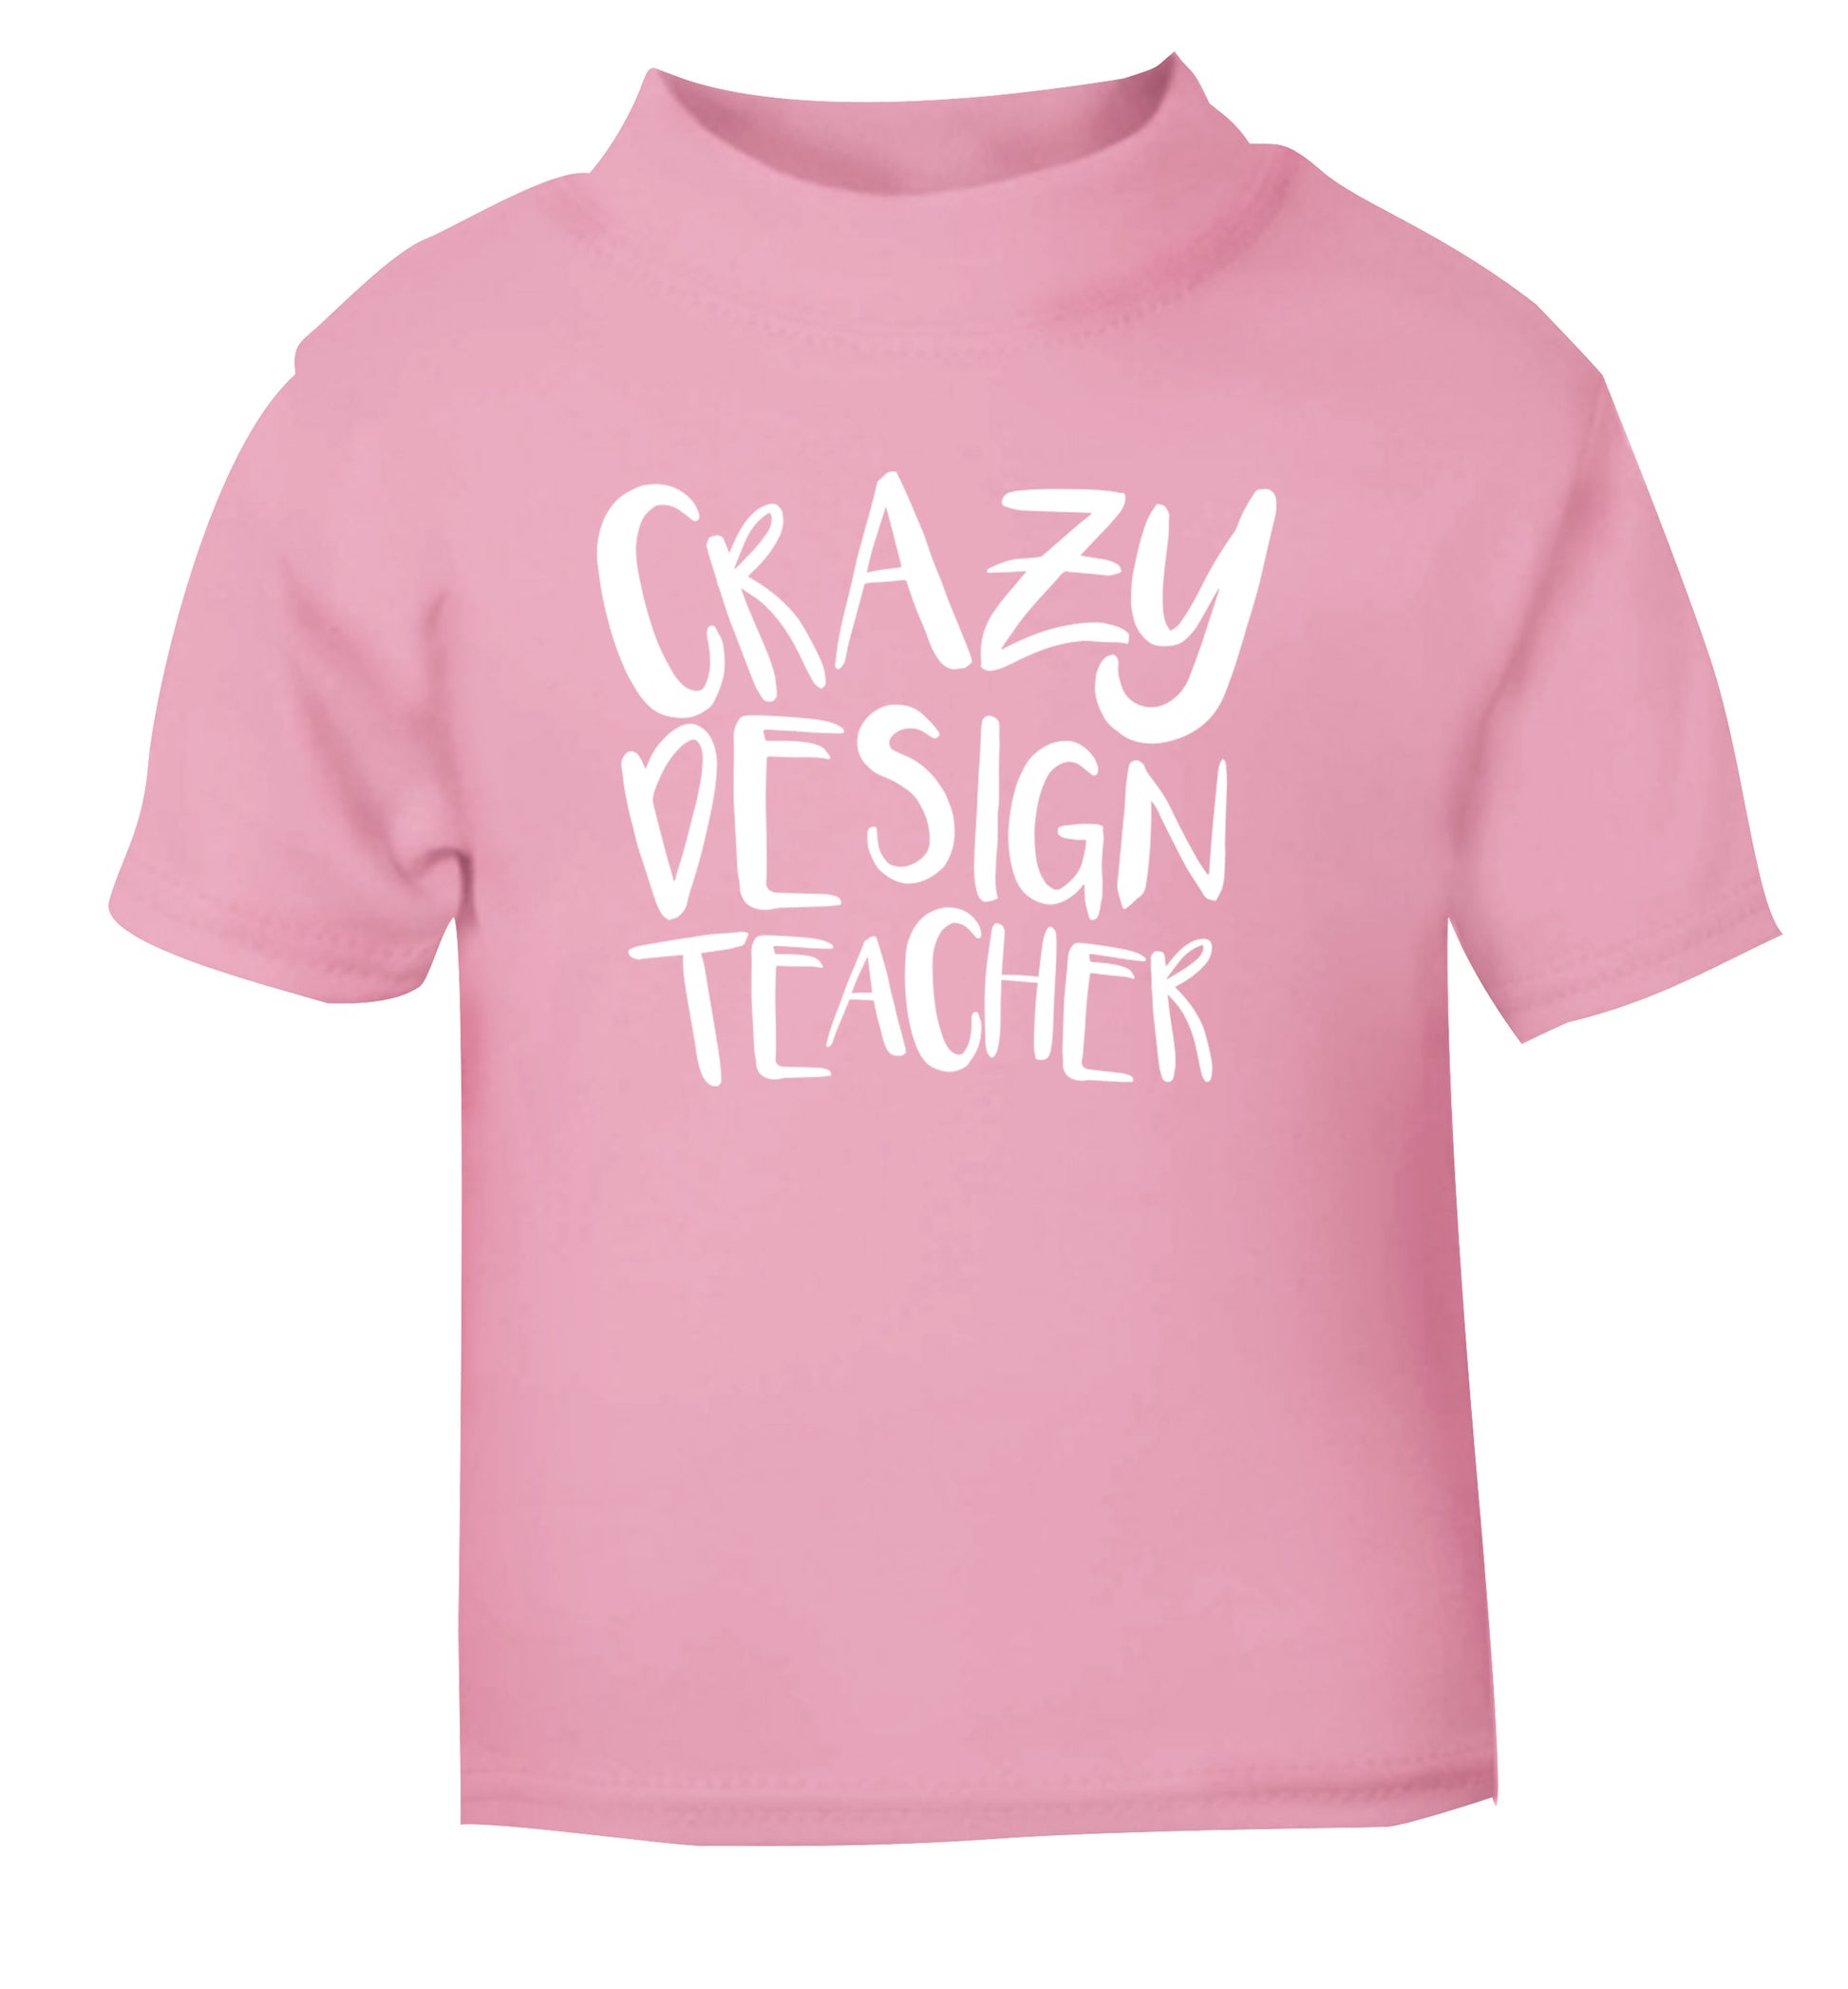 Crazy design teacher light pink Baby Toddler Tshirt 2 Years